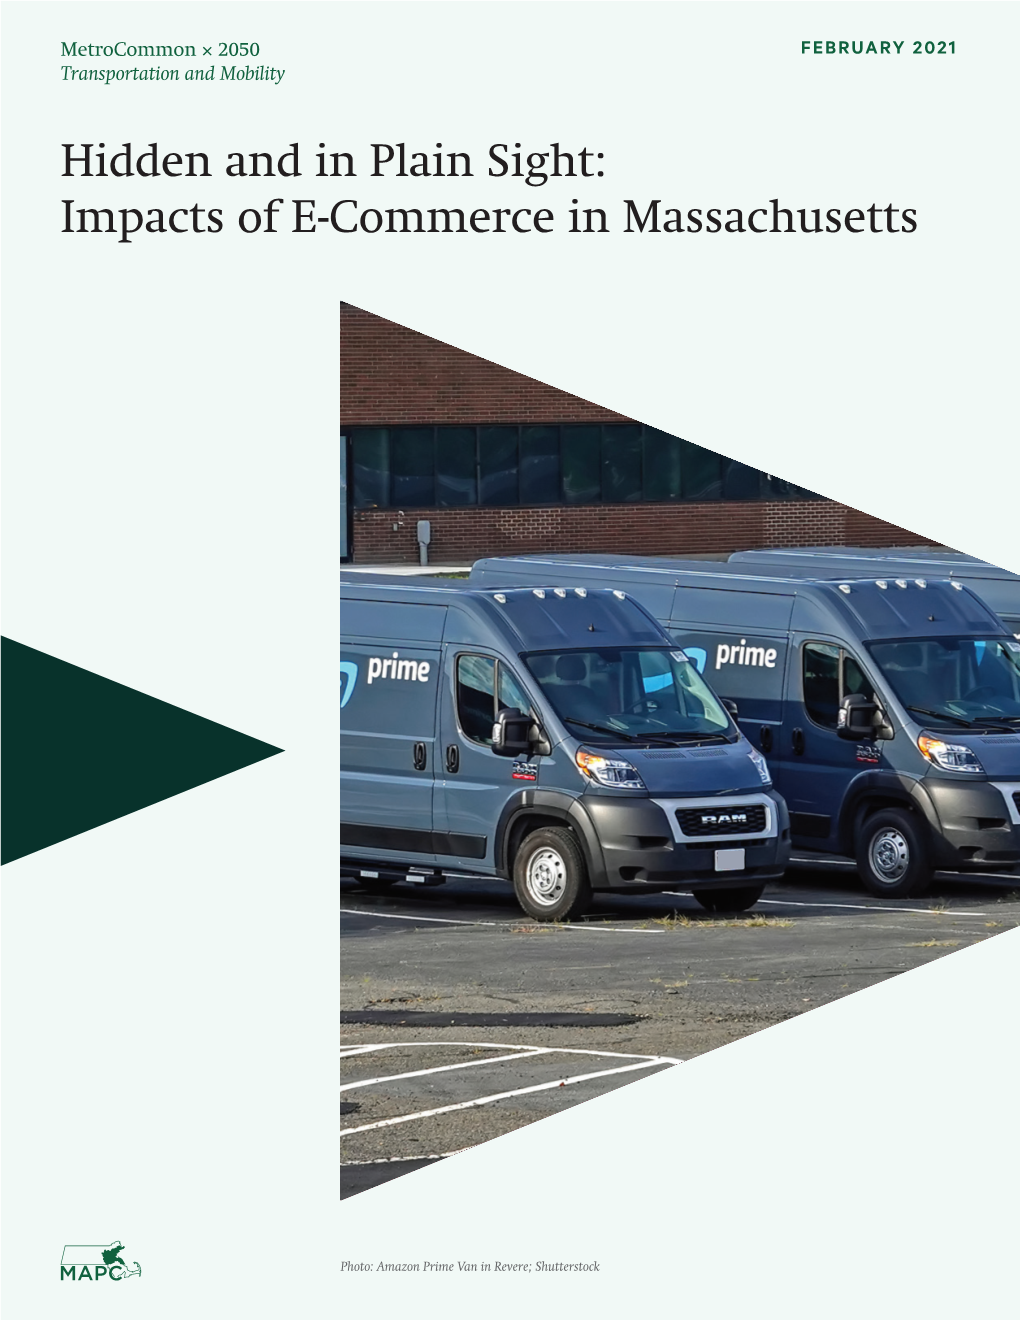 Impacts of E-Commerce in Massachusetts